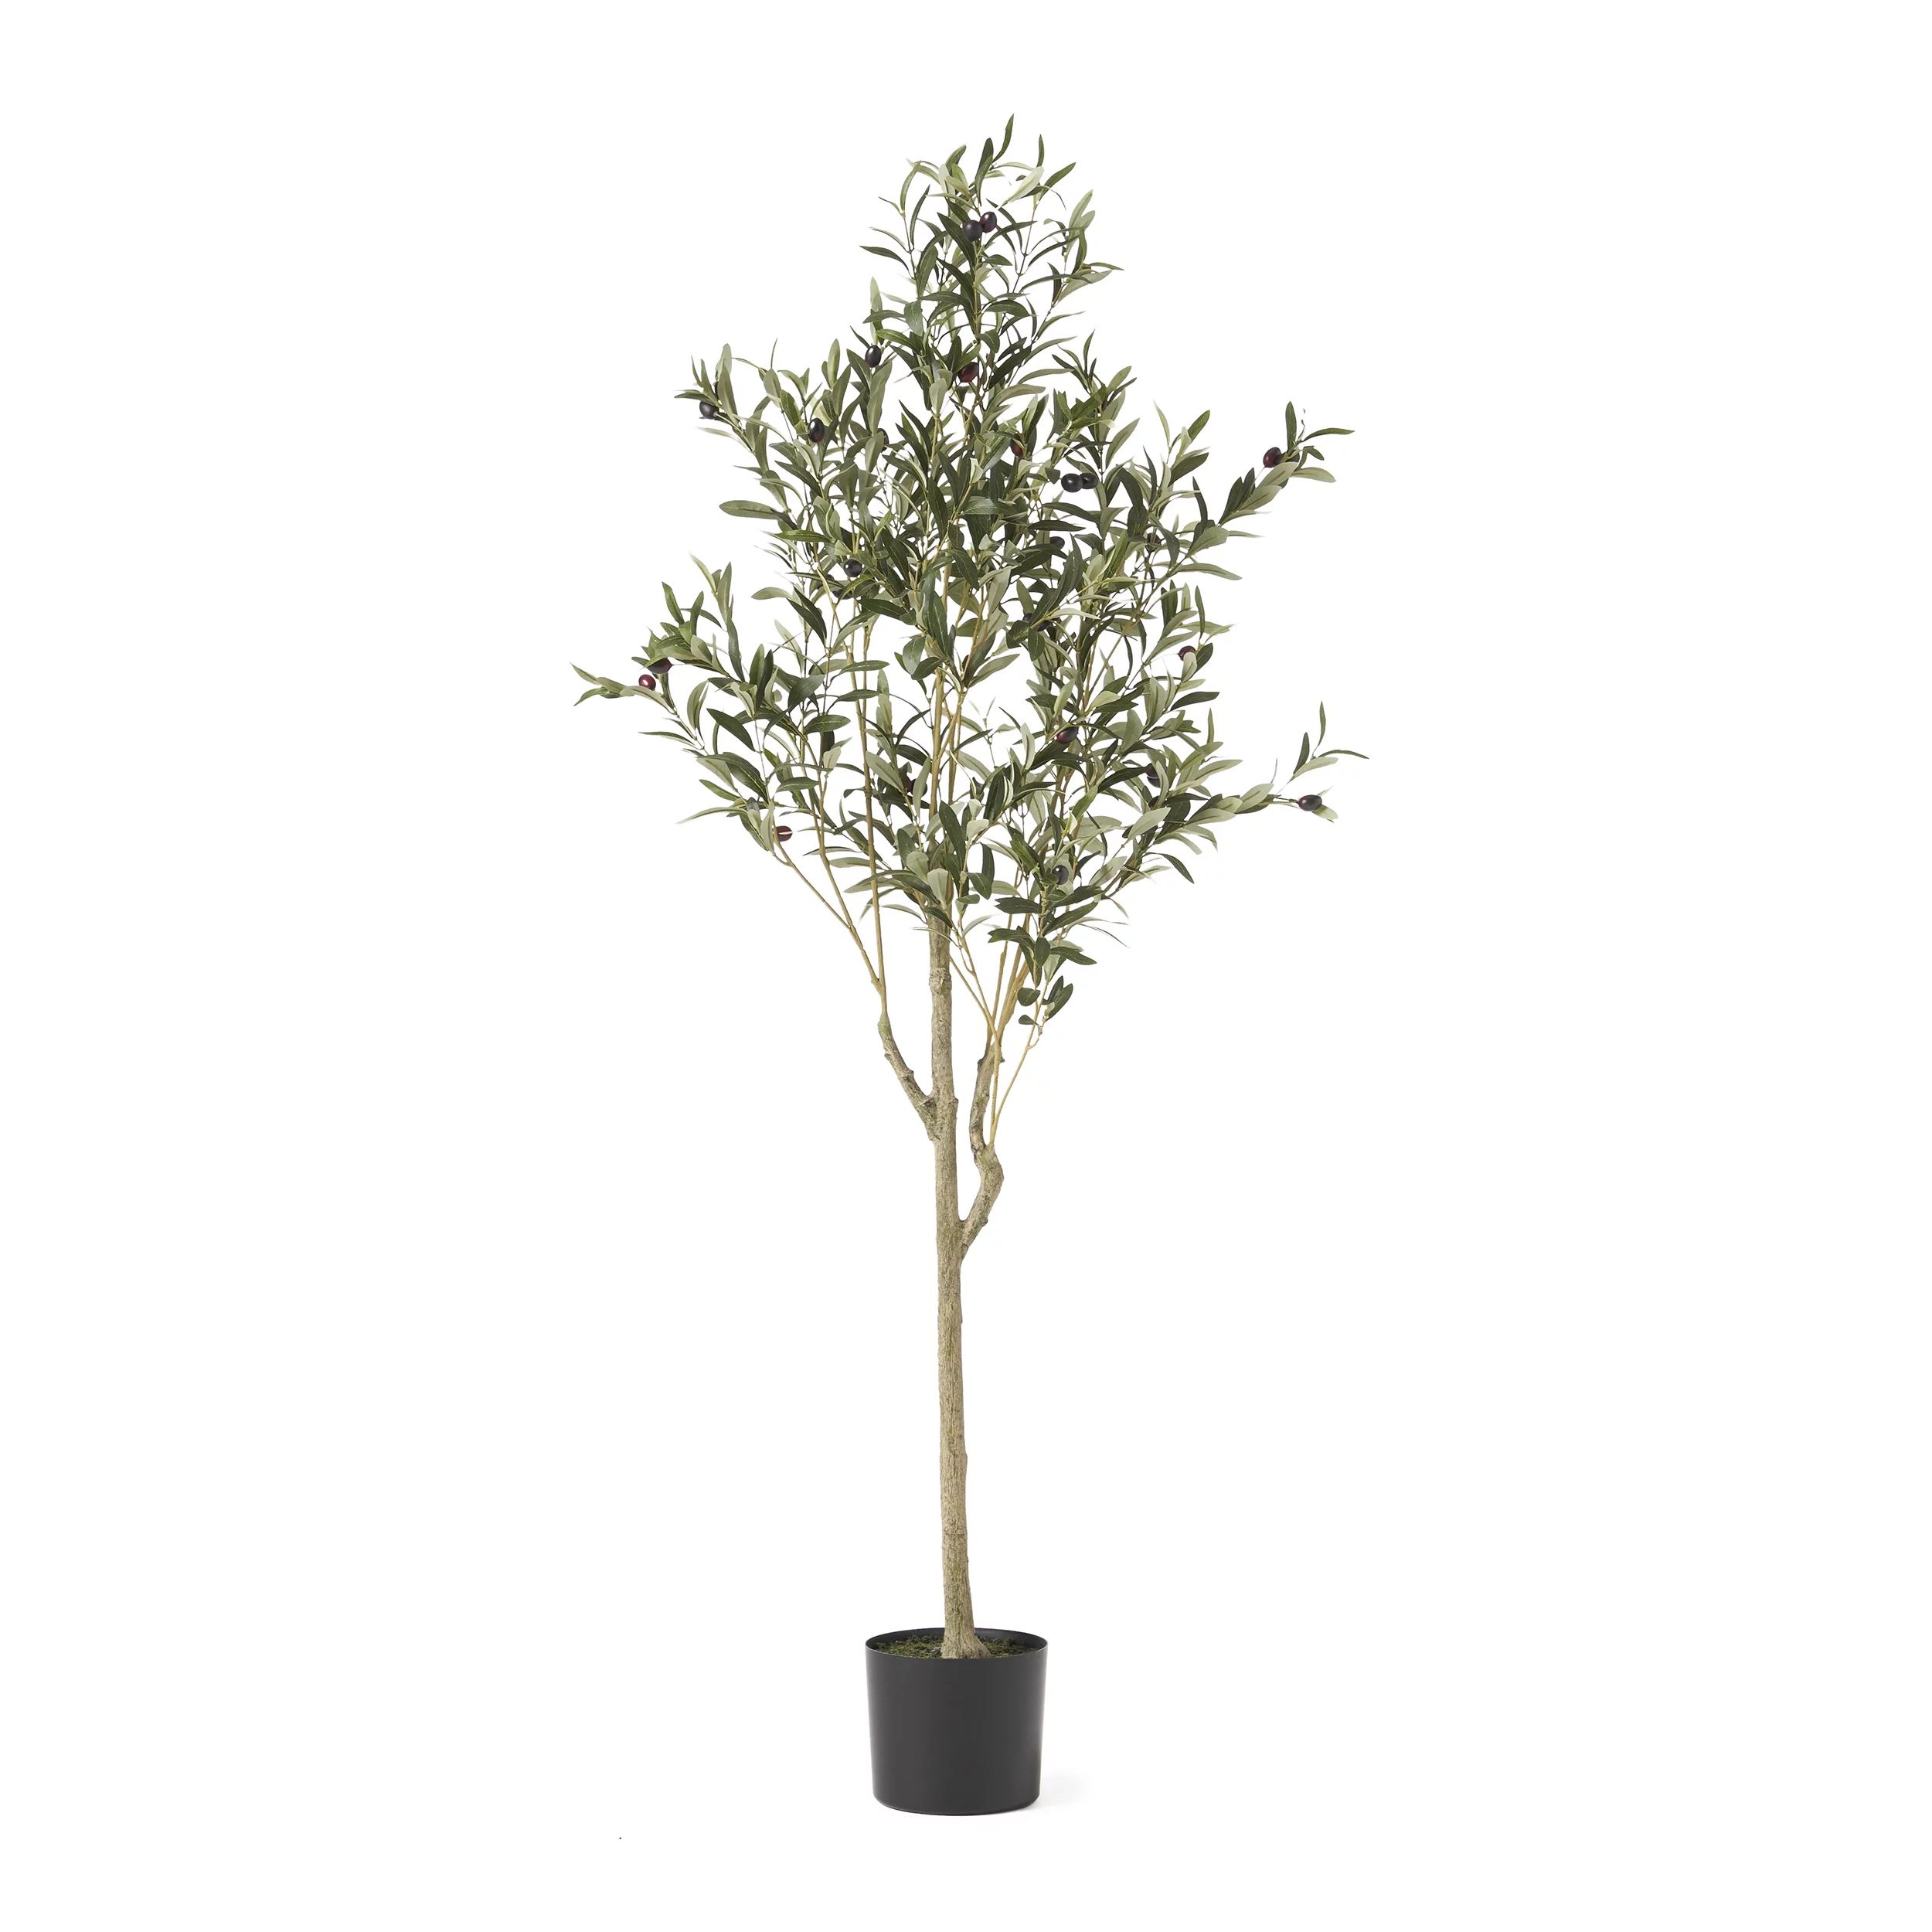 Atoka 5' x 2' Artificial Olive Tree, Green | Walmart (US)